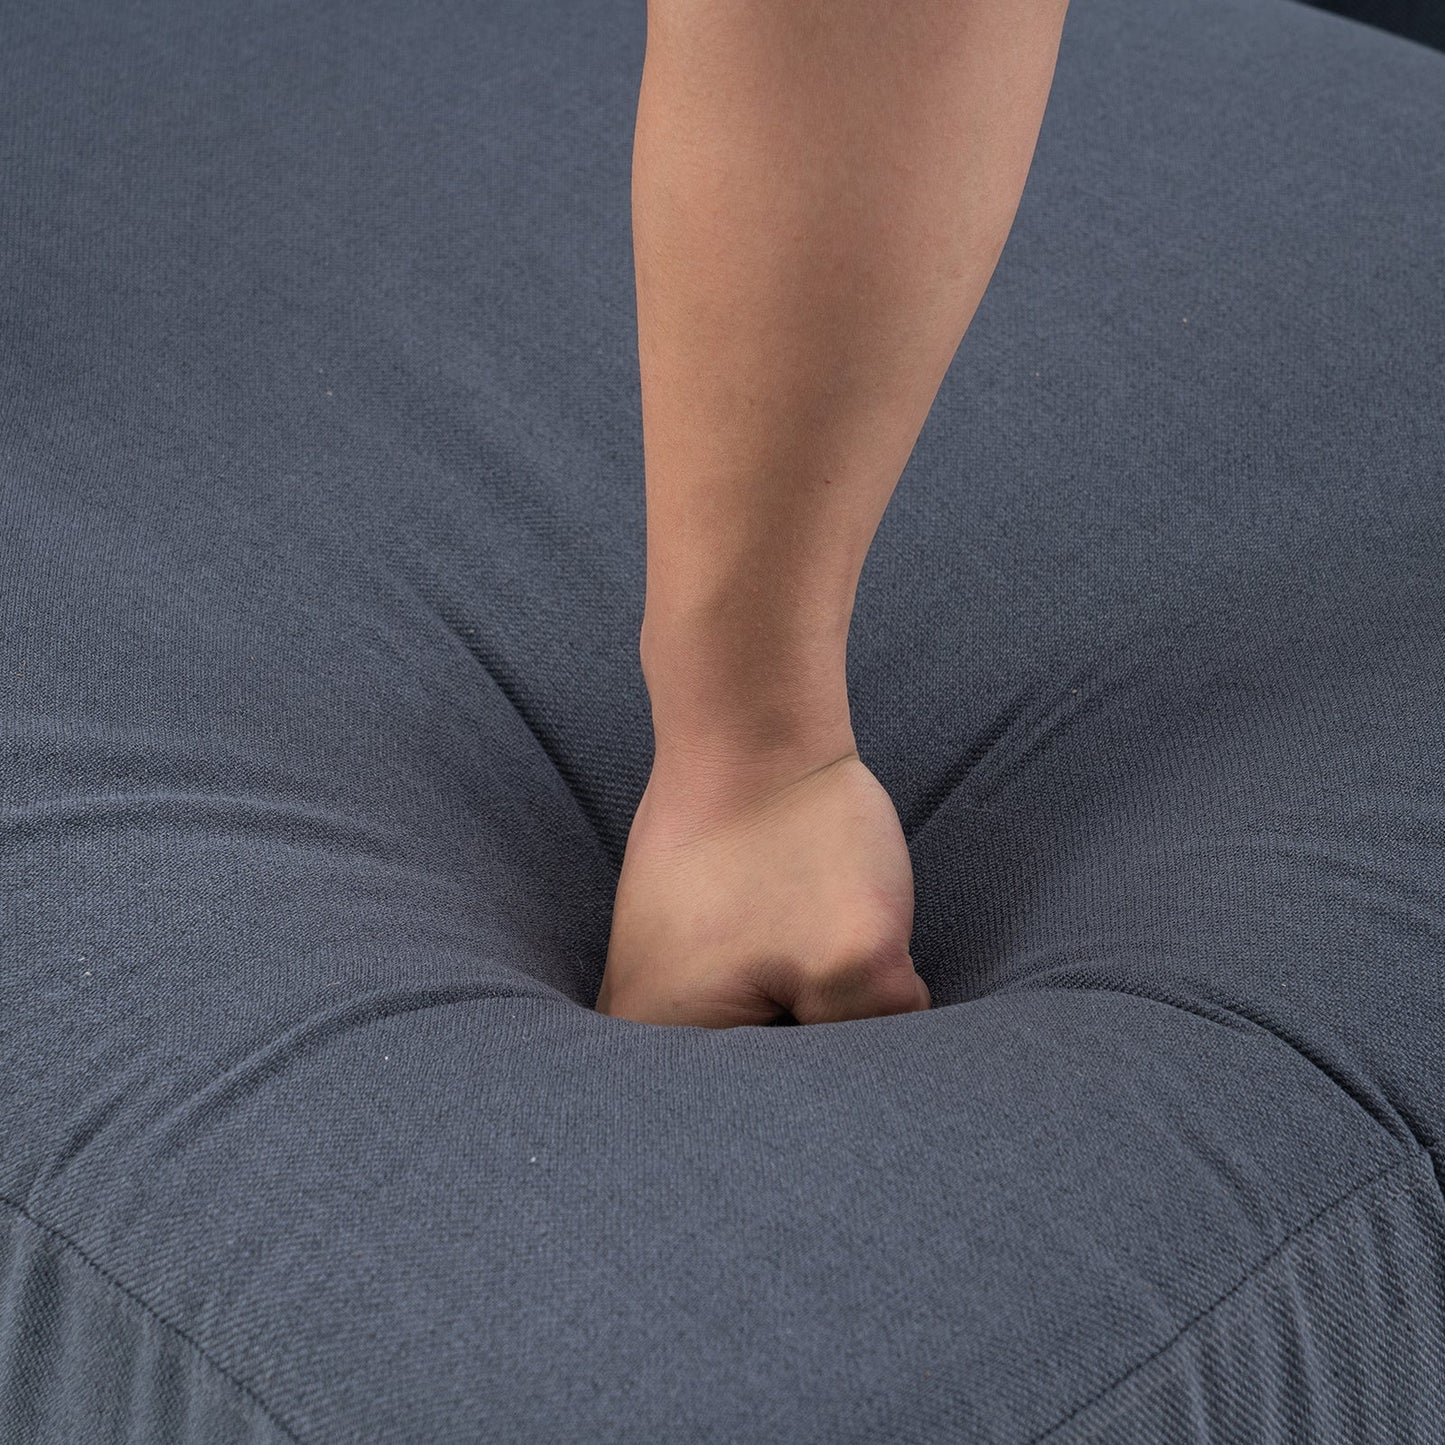 U-Shape Fabric Modular Sofa Dark Gray by Blak Hom